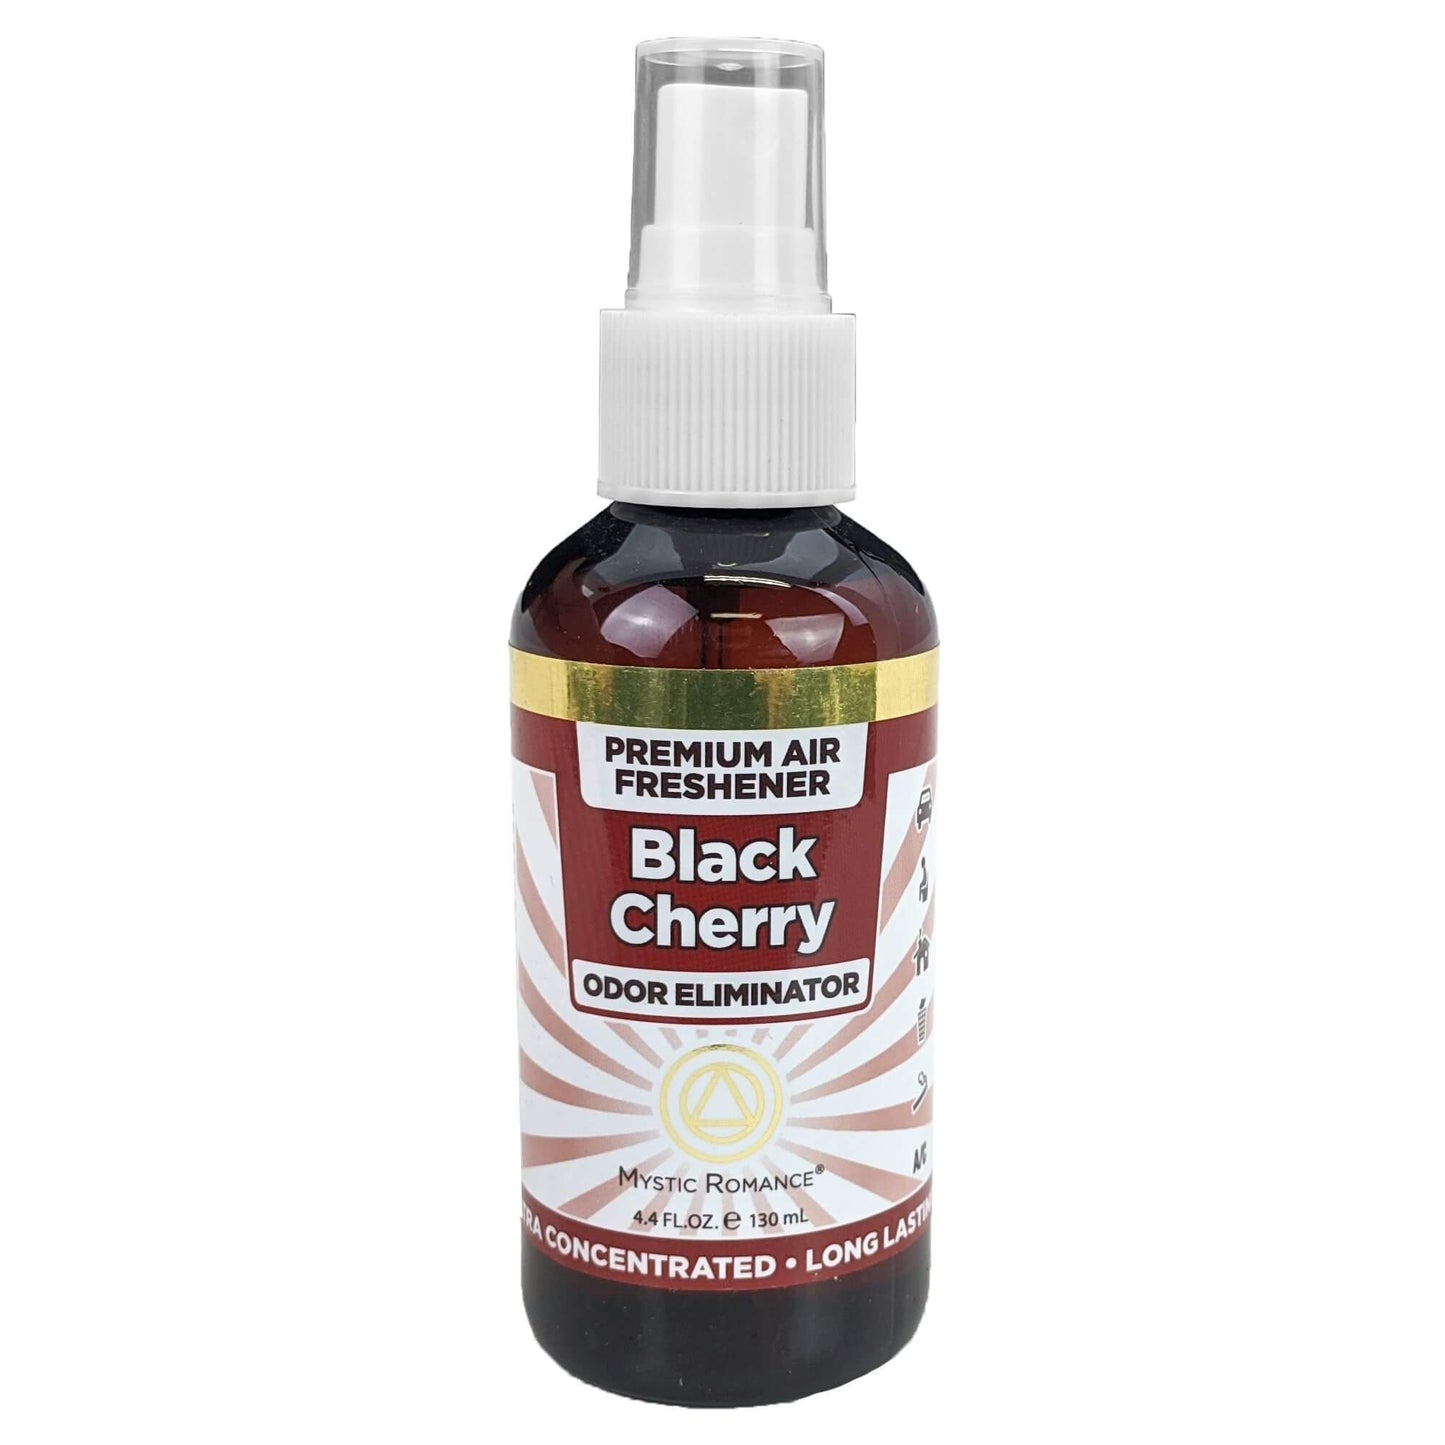 Mystic Romance Air Freshener Spray 4.4oz, Black Cherry Scent